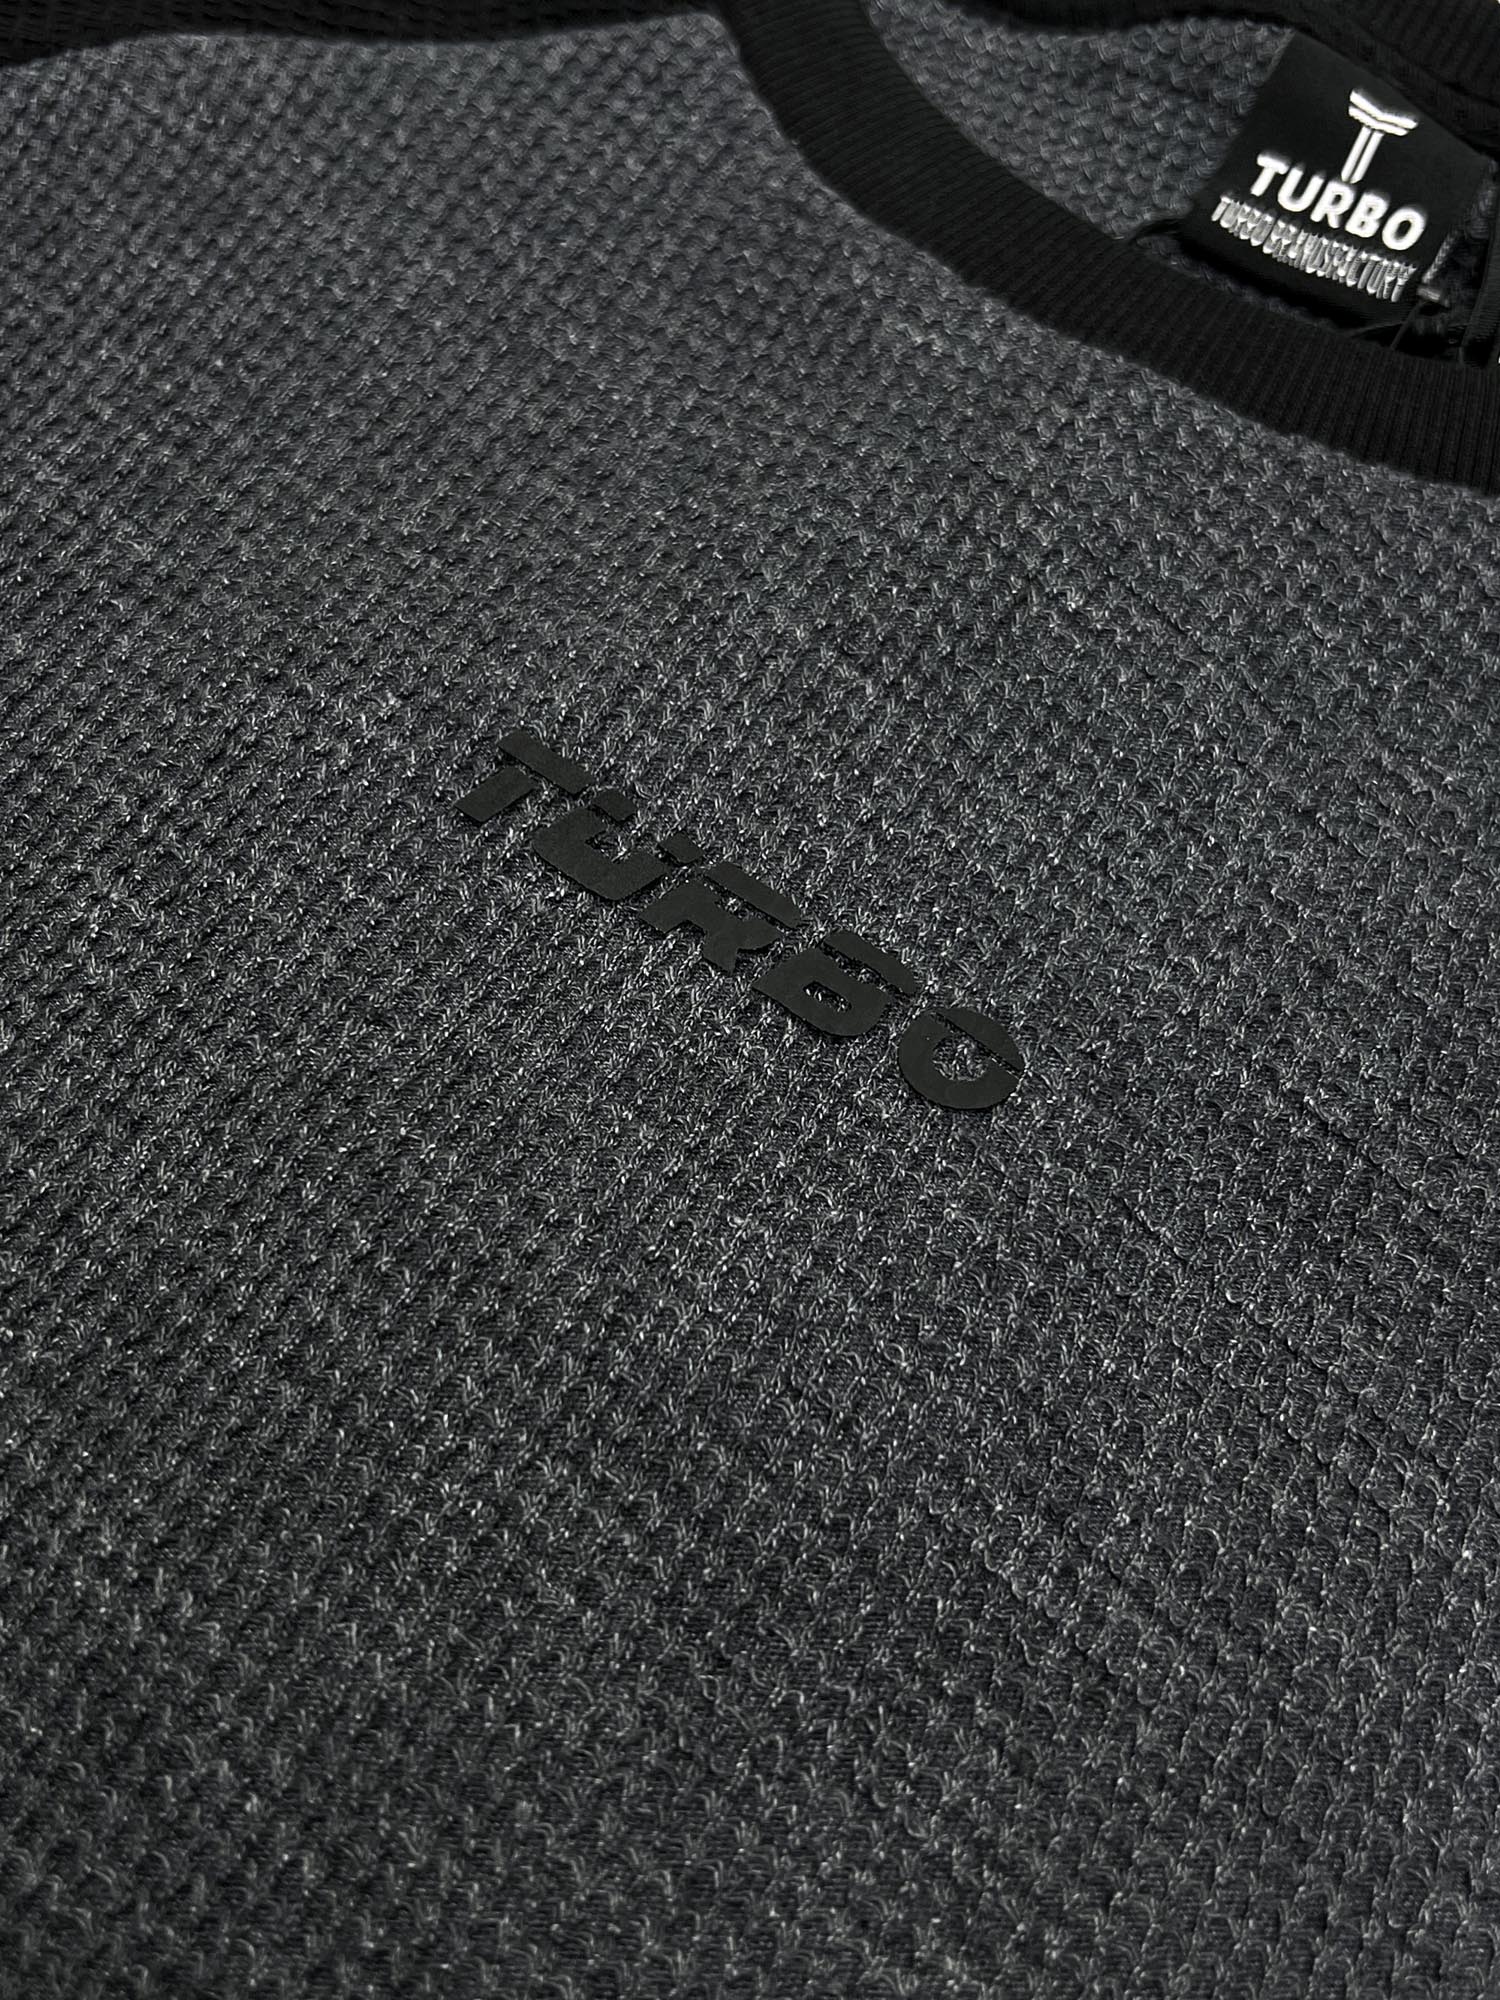 Turbo Embossed Slogan Men Sweatshirt